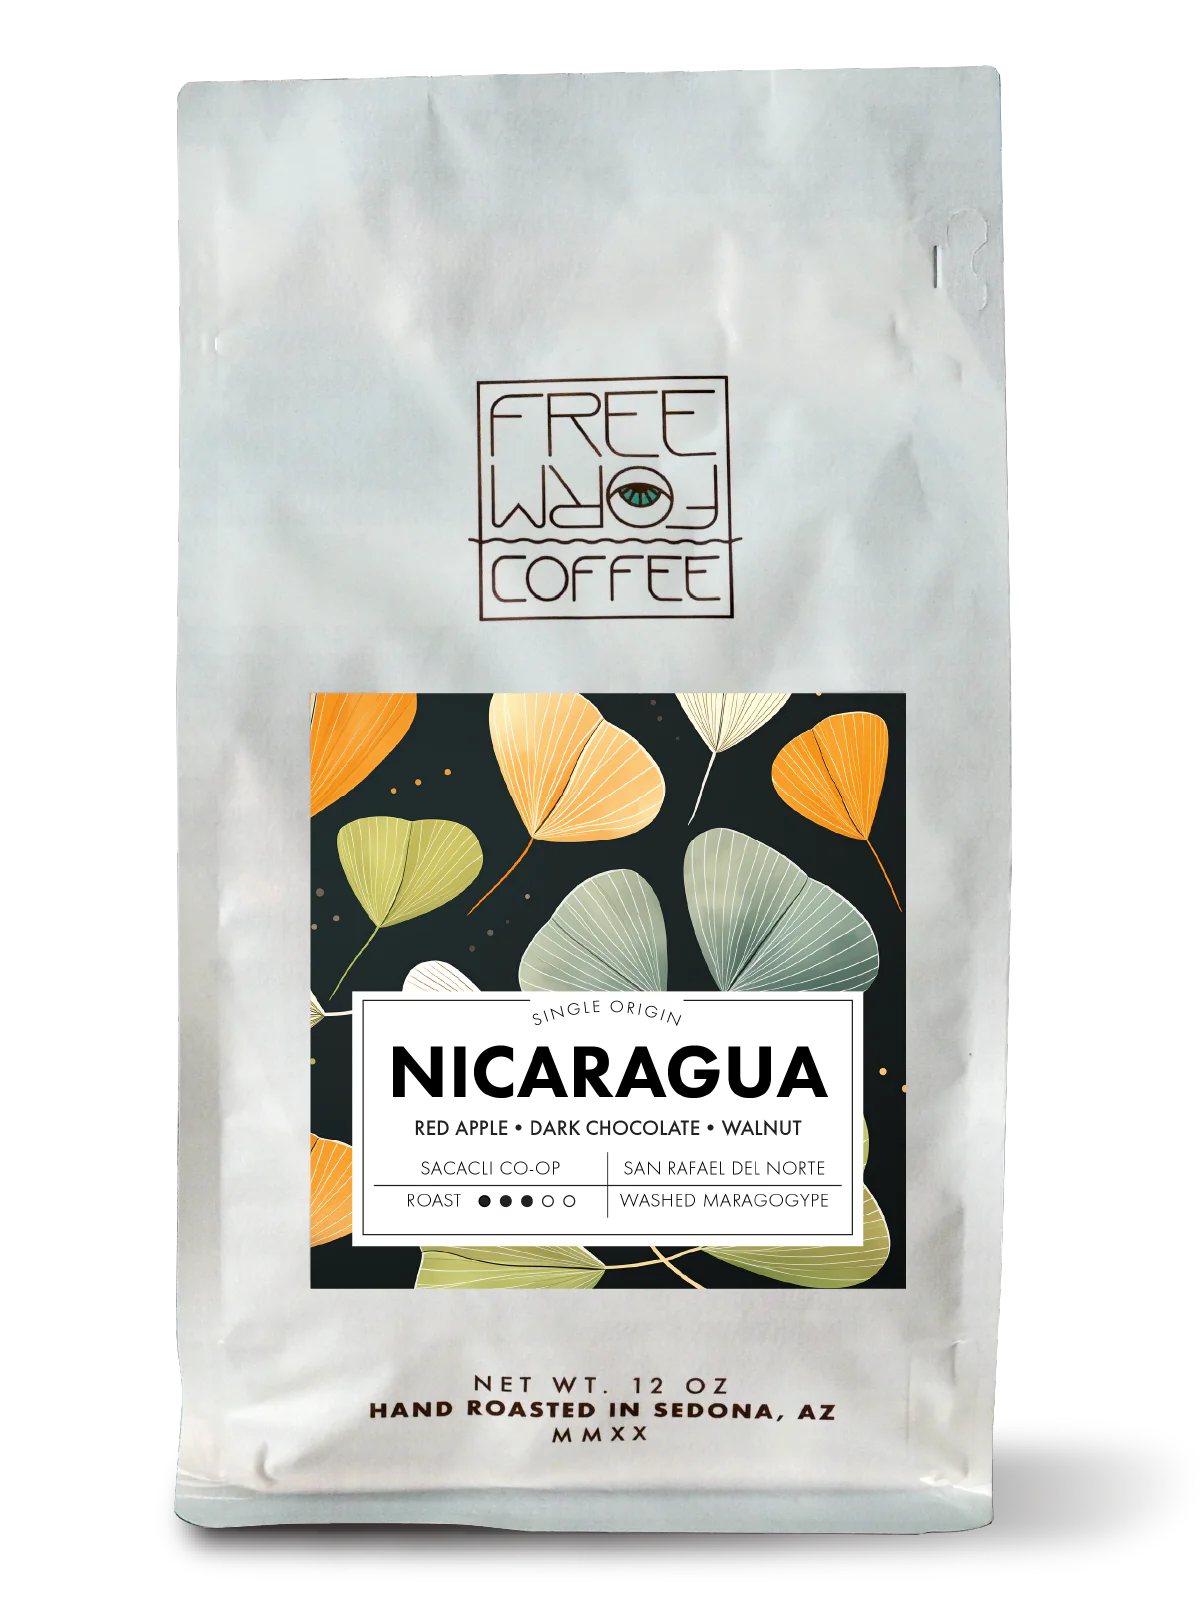 Nicaragua- Maragogype Regenerative Coffee Organic Certified